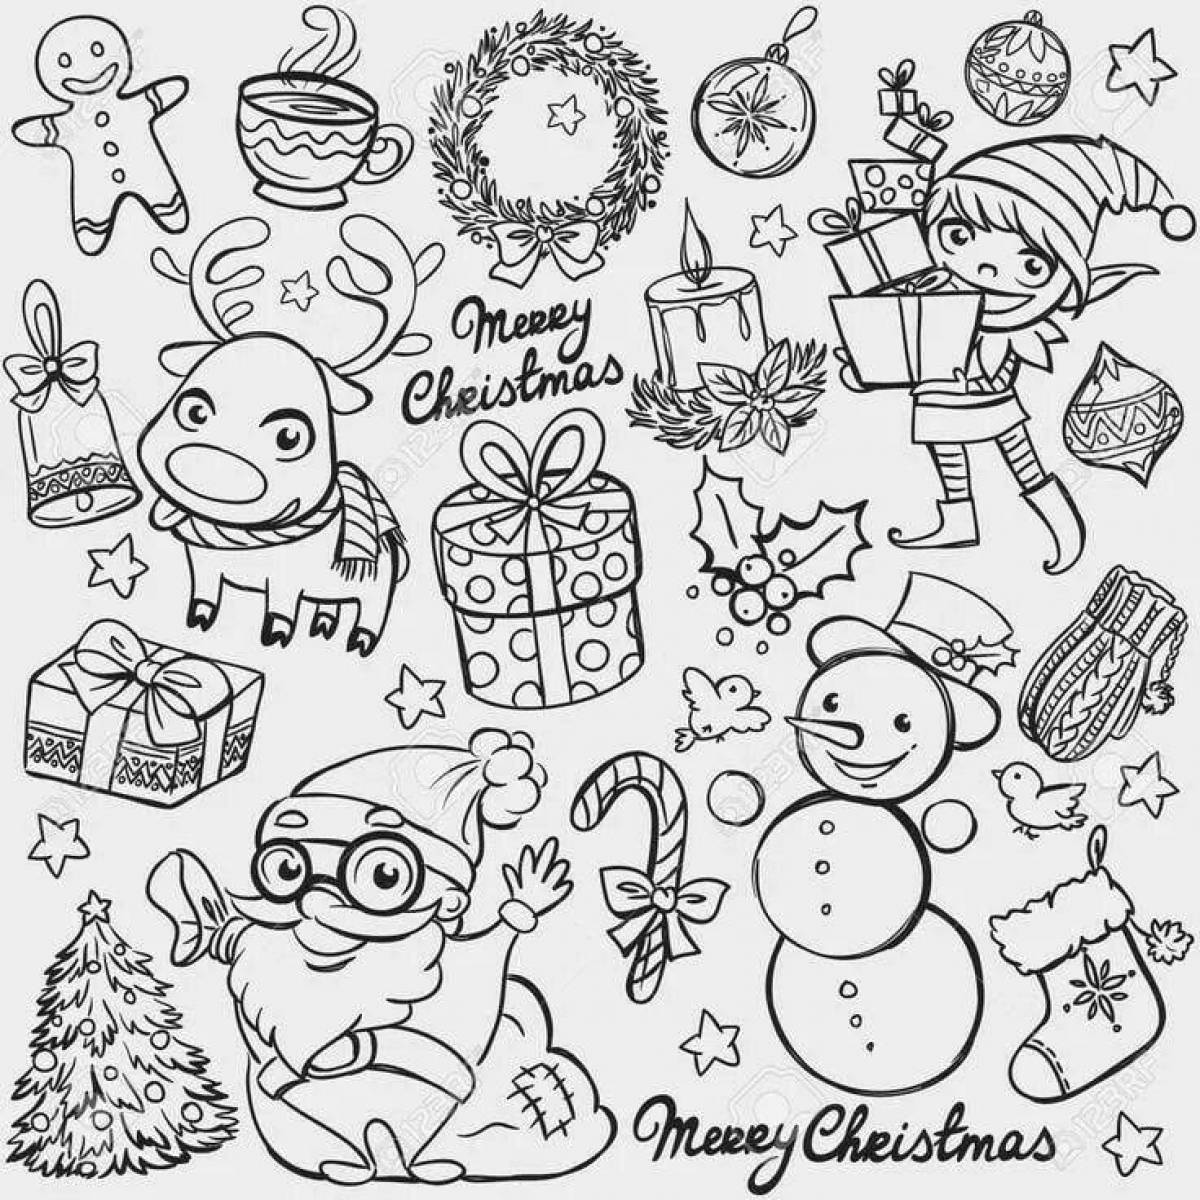 Merry Christmas mini coloring book